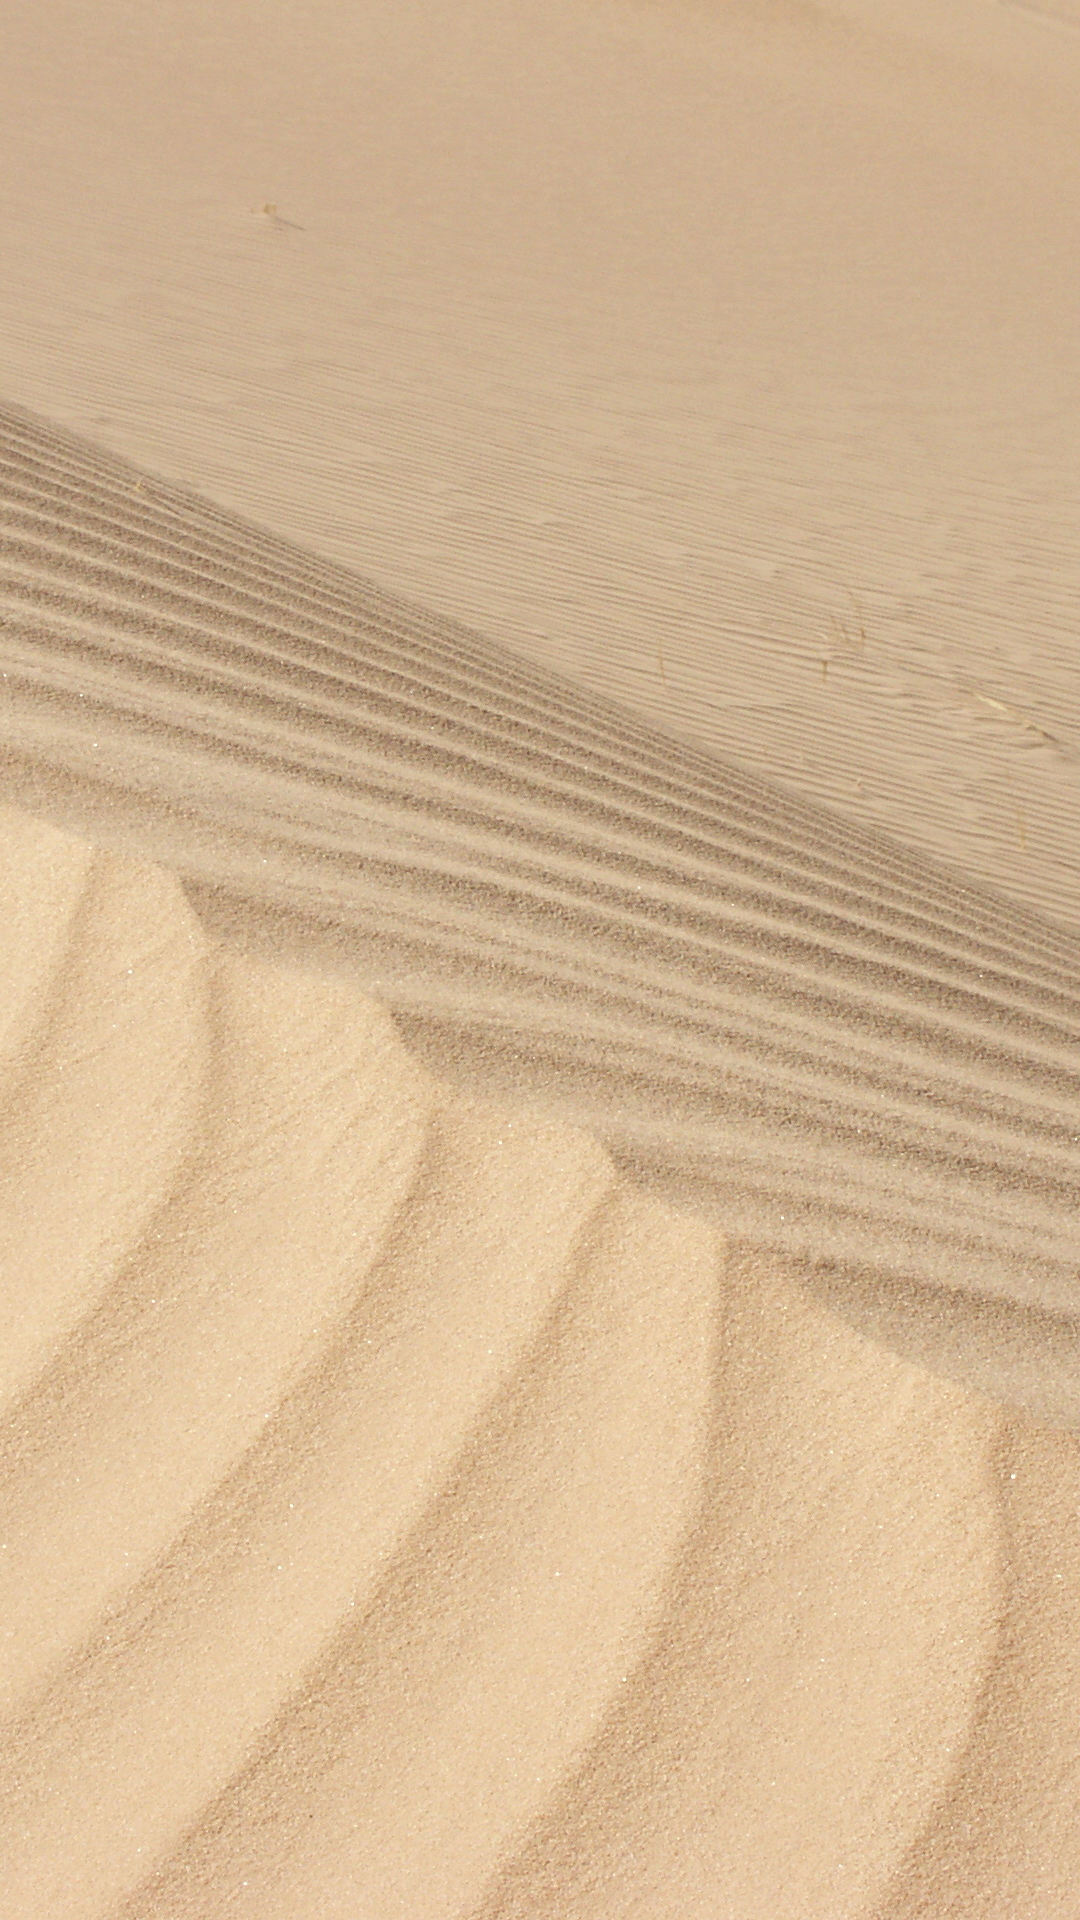 Handy-Wallpaper Sand, Düne, Steppe, Sahara, Afrika, Algerien, Erde/natur kostenlos herunterladen.